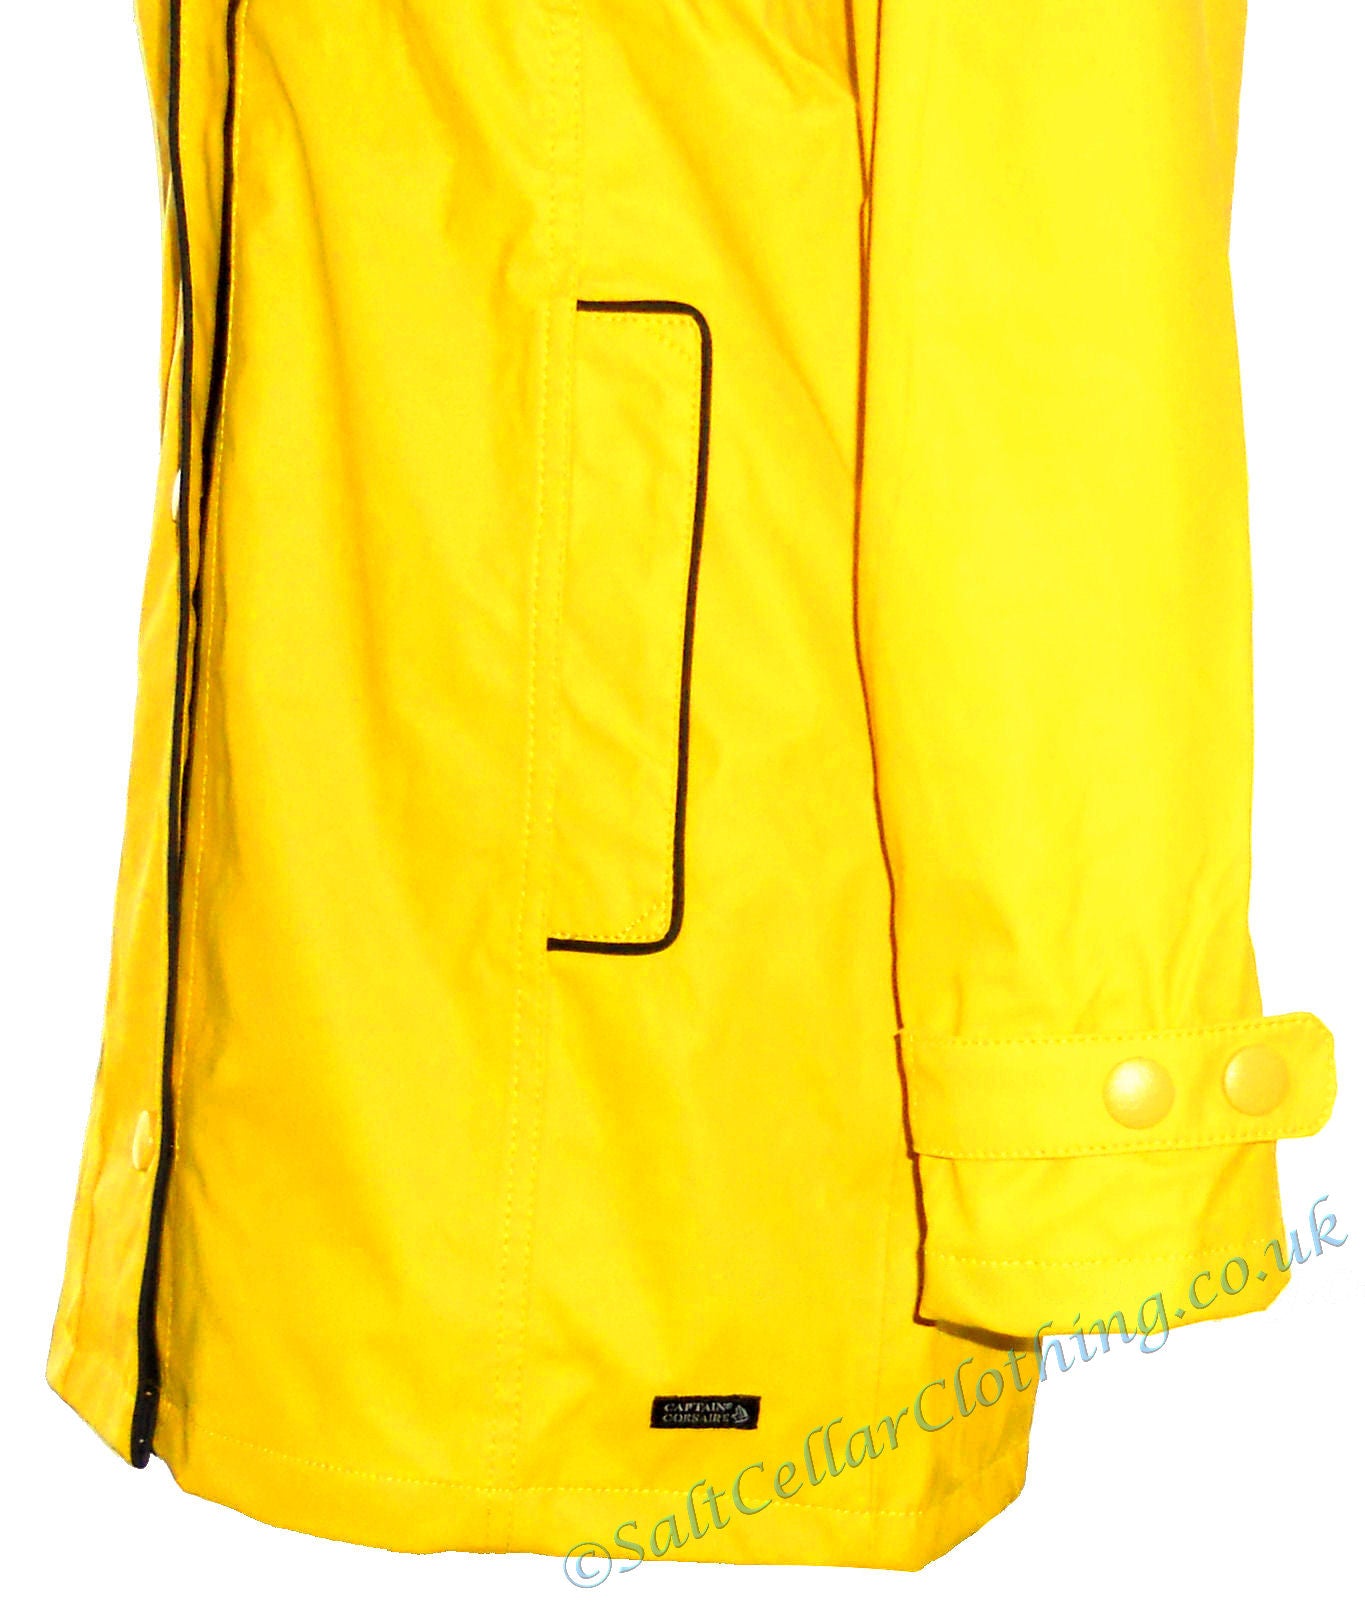 Women's nautical style Regate Ete waterproof rain jacket from Captain Corsaire in Yellow.